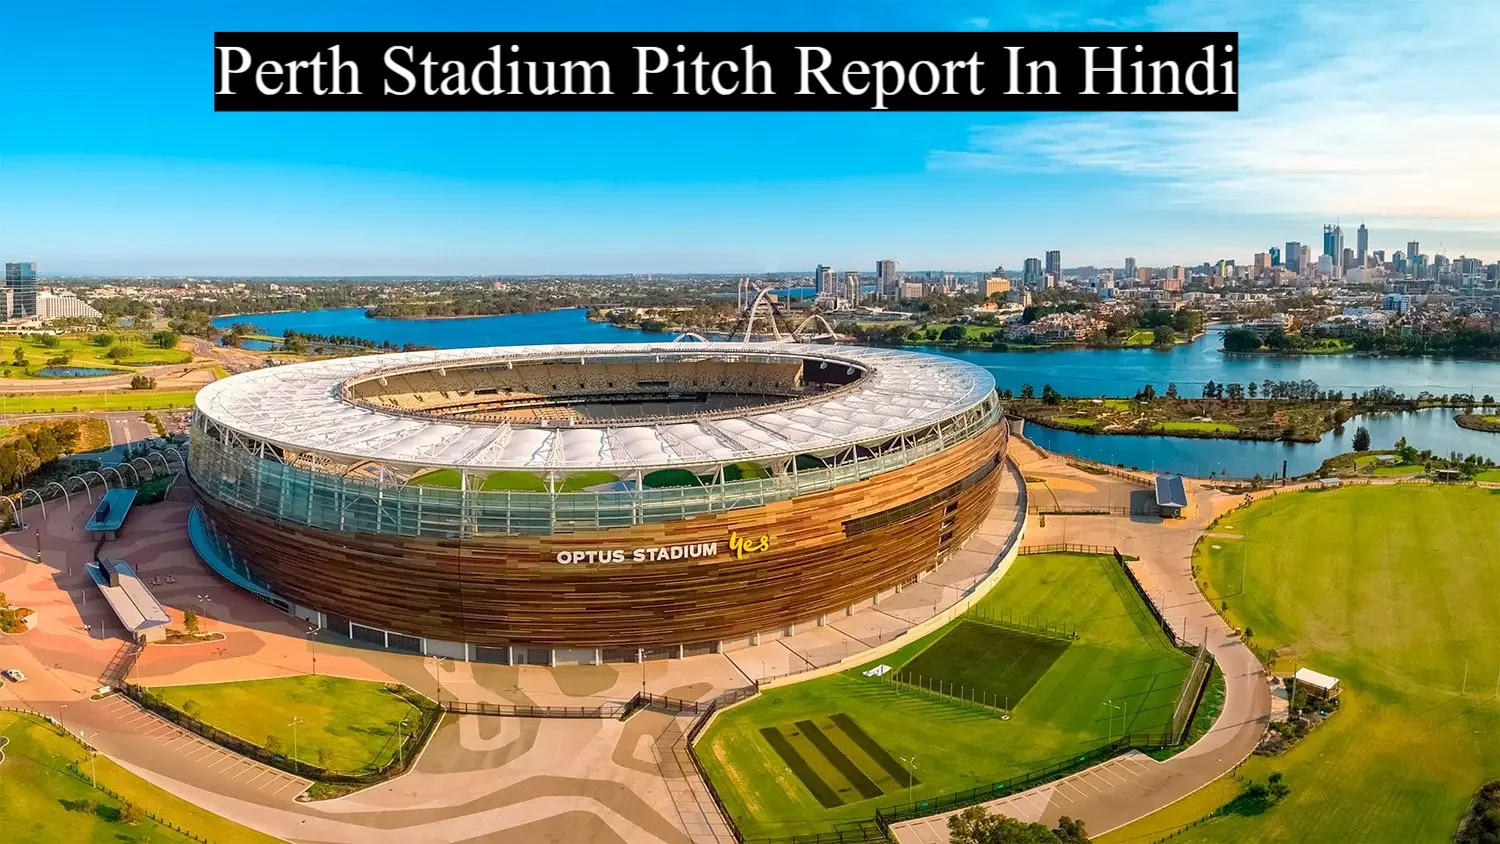 Perth Stadium (Optus Stadium) Pitch Report In Hindi | पर्थ स्टेडियम पिच रिपोर्ट & रिकॉर्ड & जानकारी